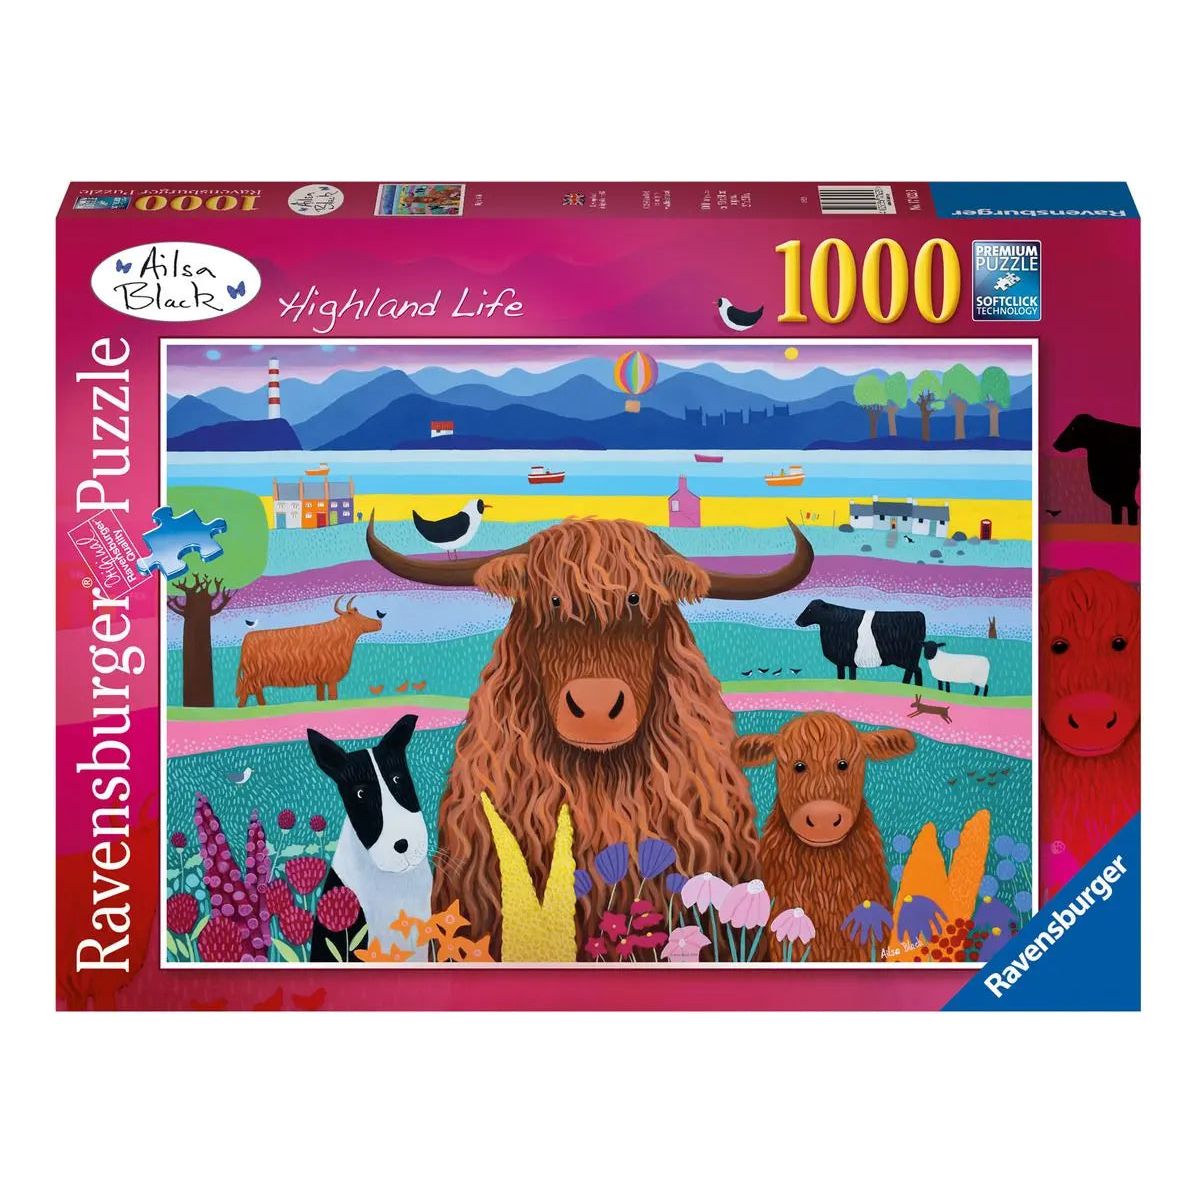 Highland Life 1000 Piece Jigsaw Puzzle Ravensburger